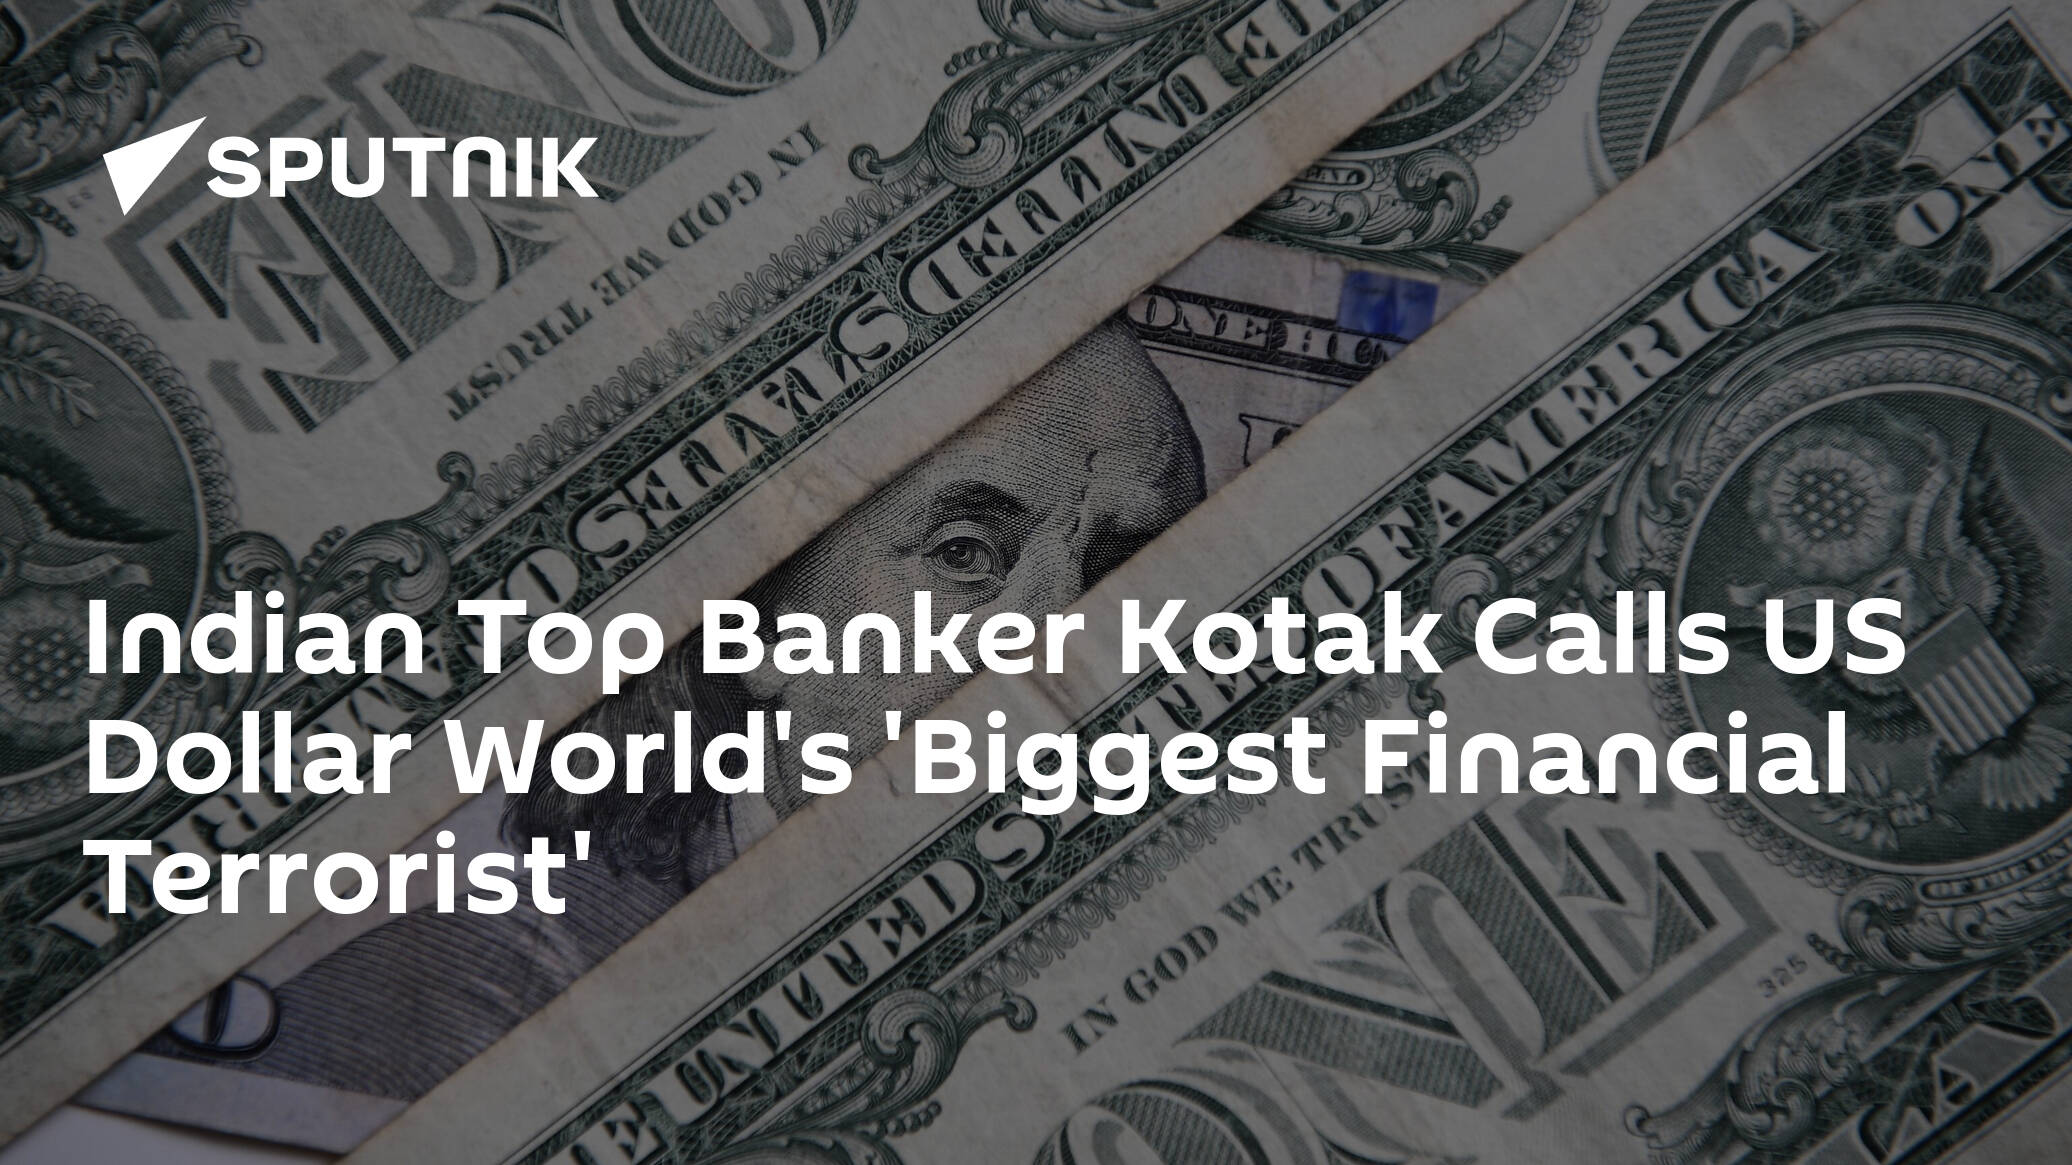 Indian Top Banker Kotak Calls US Dollar World's 'Biggest Financial Terrorist'